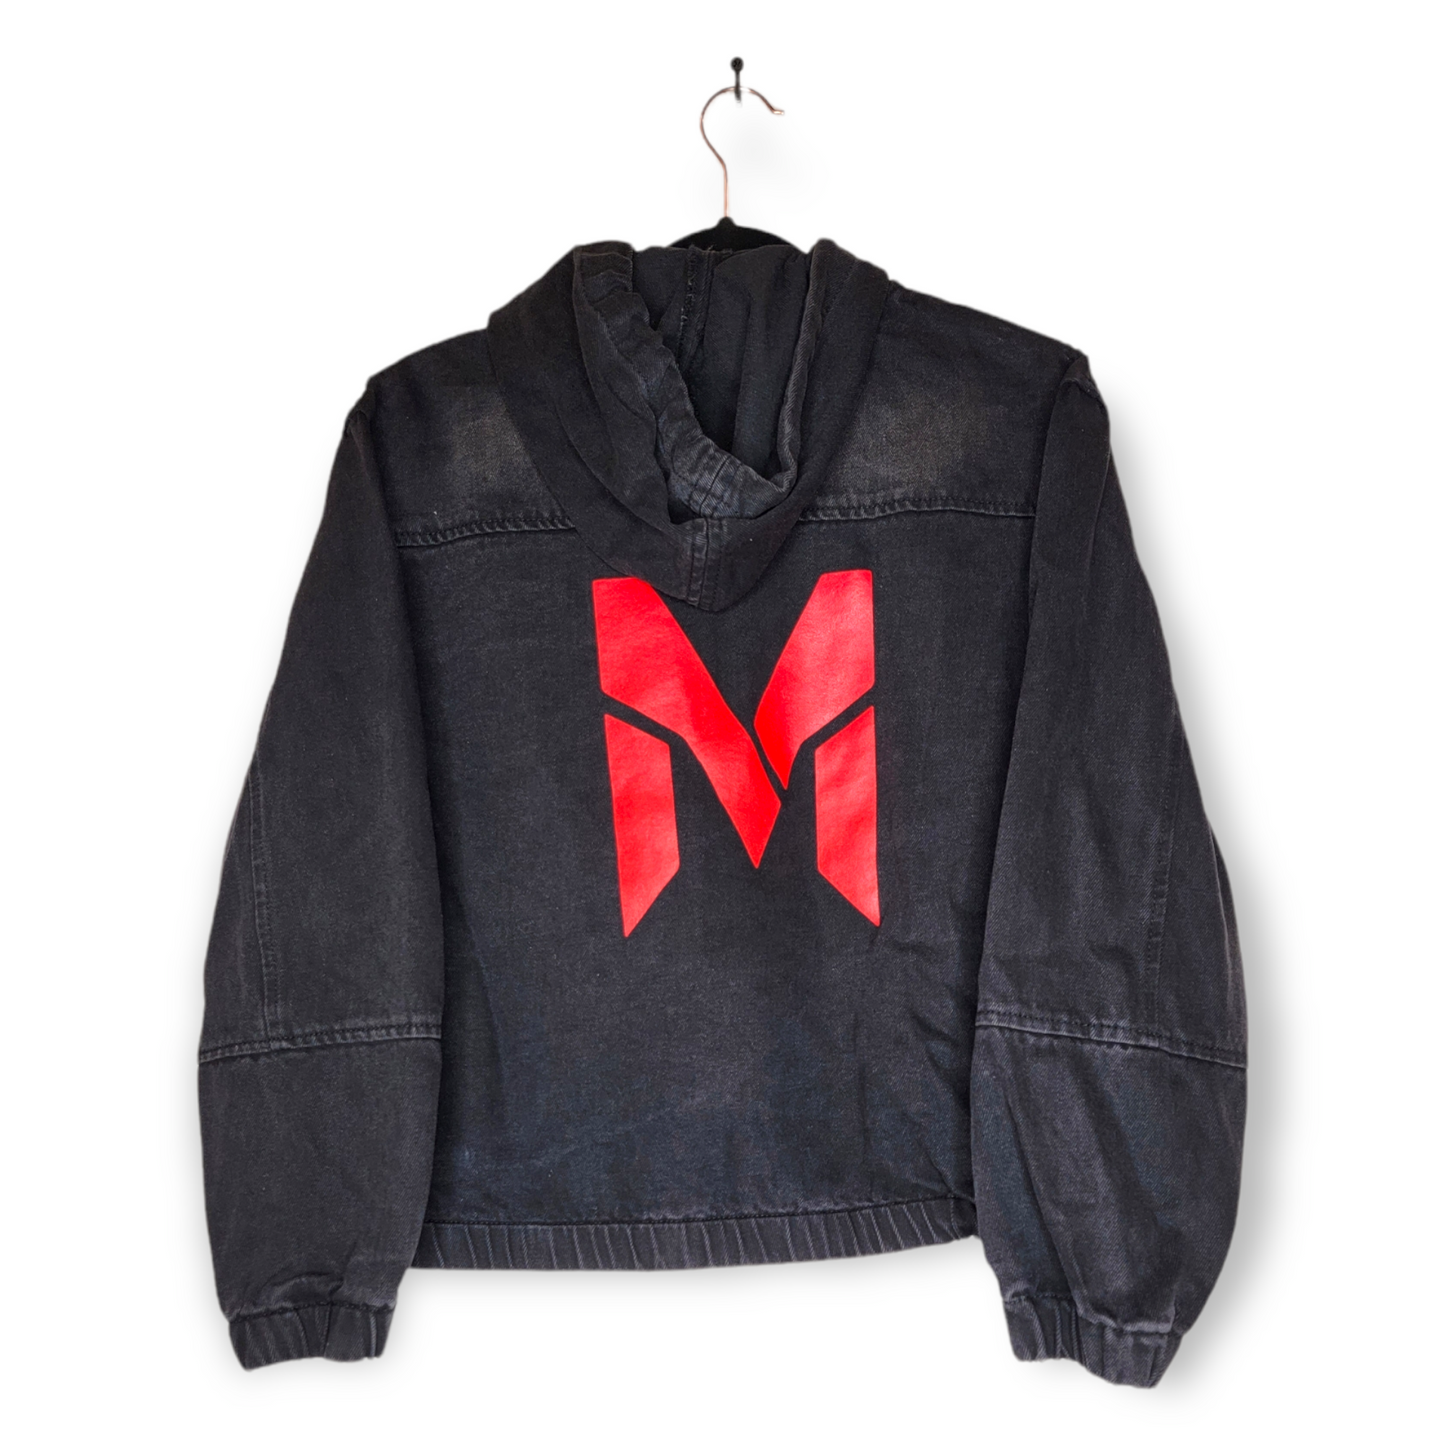 Mavlife Black Hooded Jacket